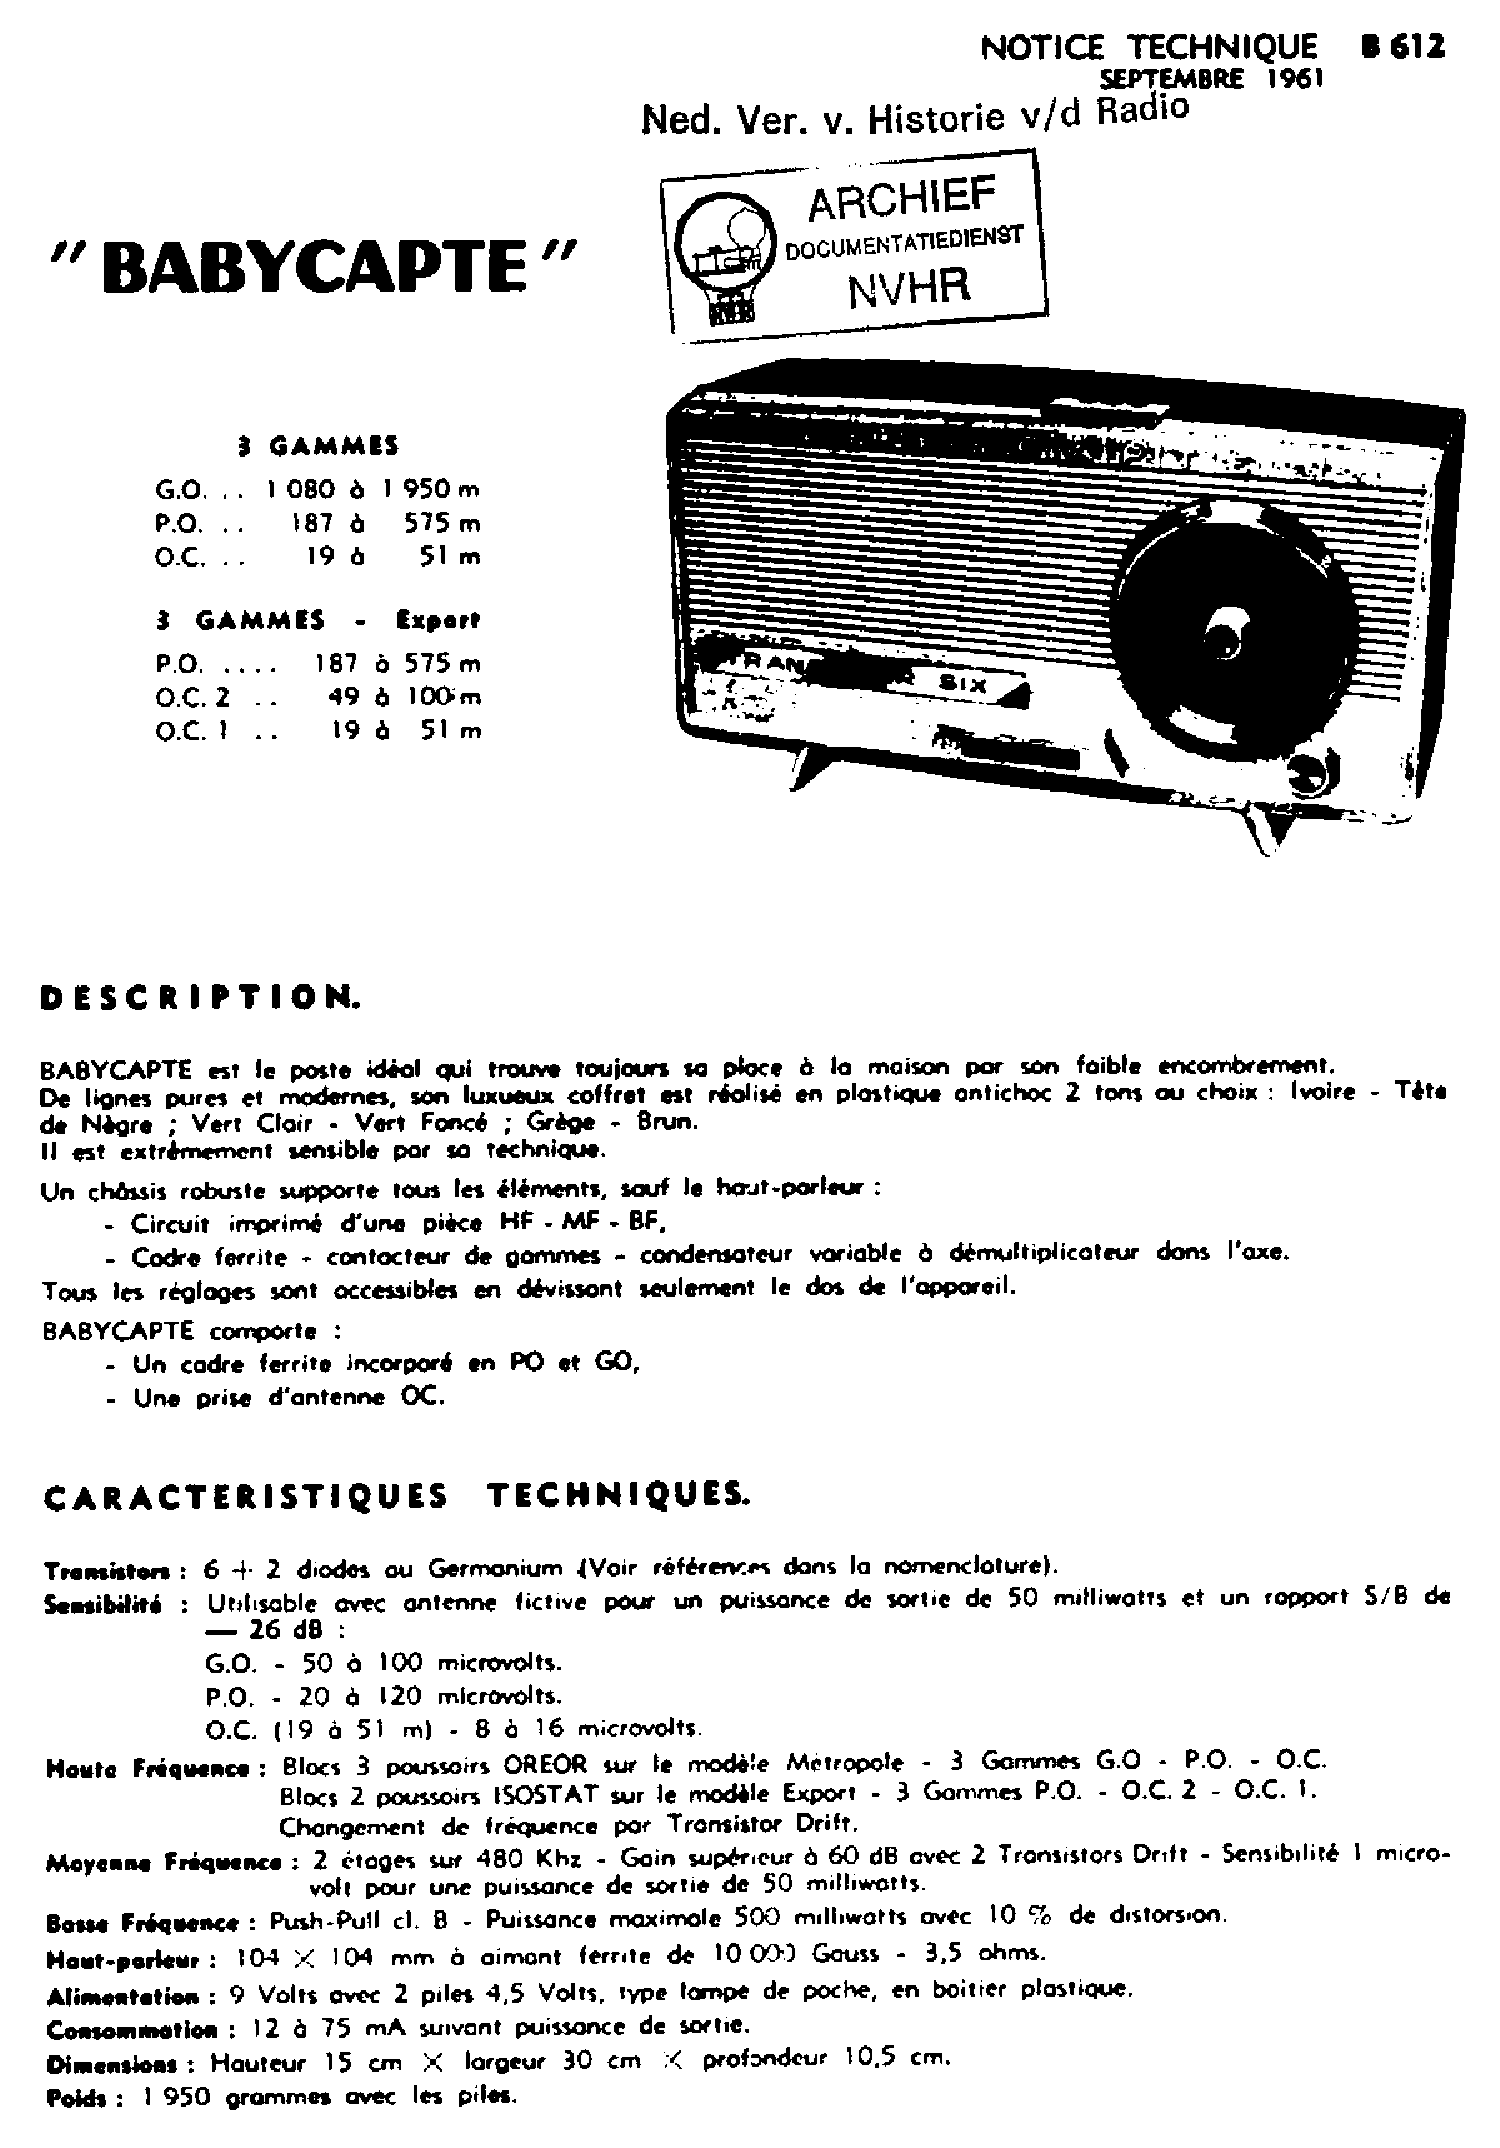 CELARD BABYCAPTE TRANSISTOR RADIO 1961 SM service manual (1st page)